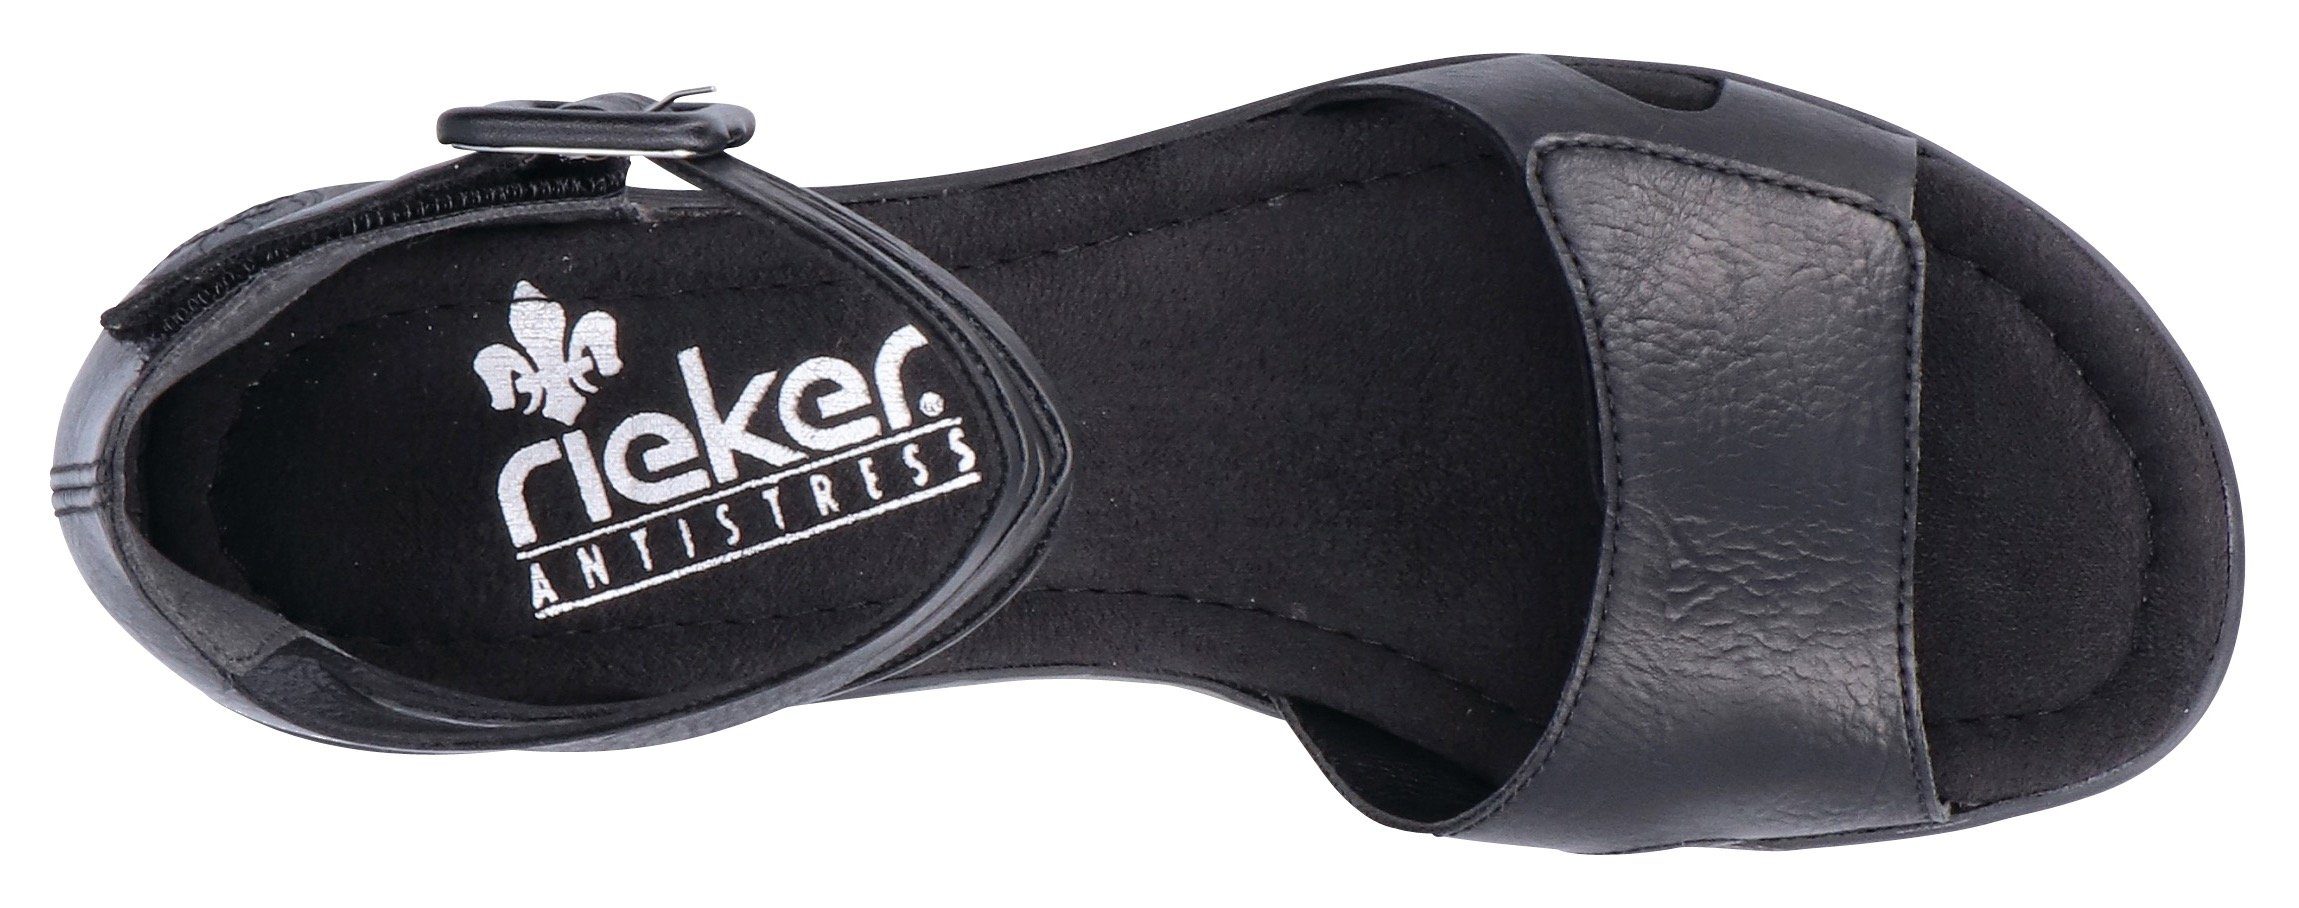 Rieker Sandalette trendiger mit in Kork-Optik Laufsohle